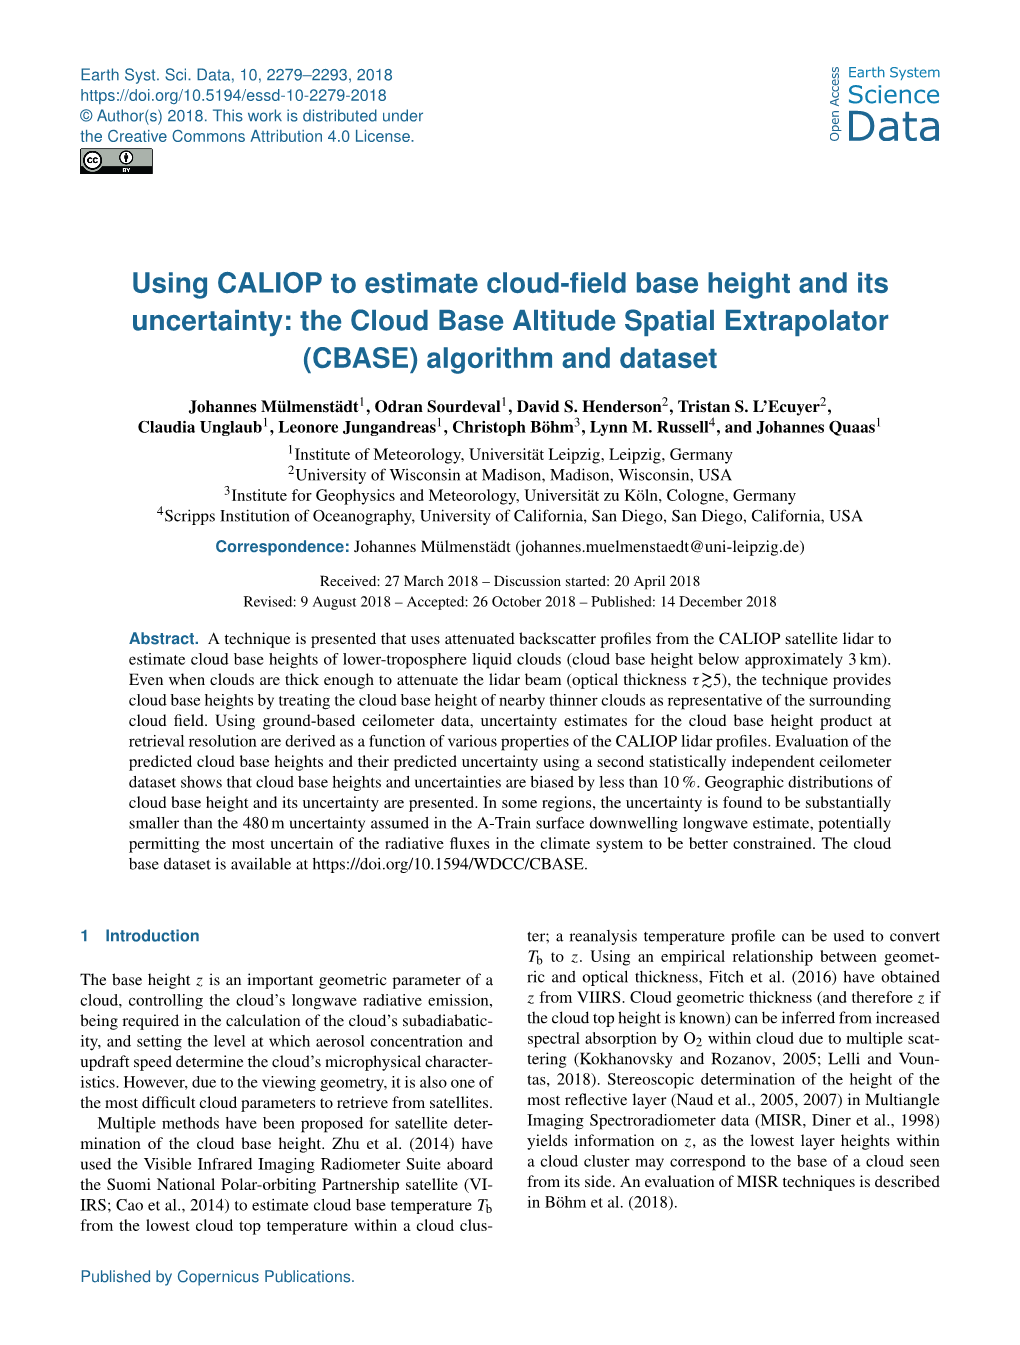 The Cloud Base Altitude Spatial Extrapolator (CBASE) Algorithm and Dataset